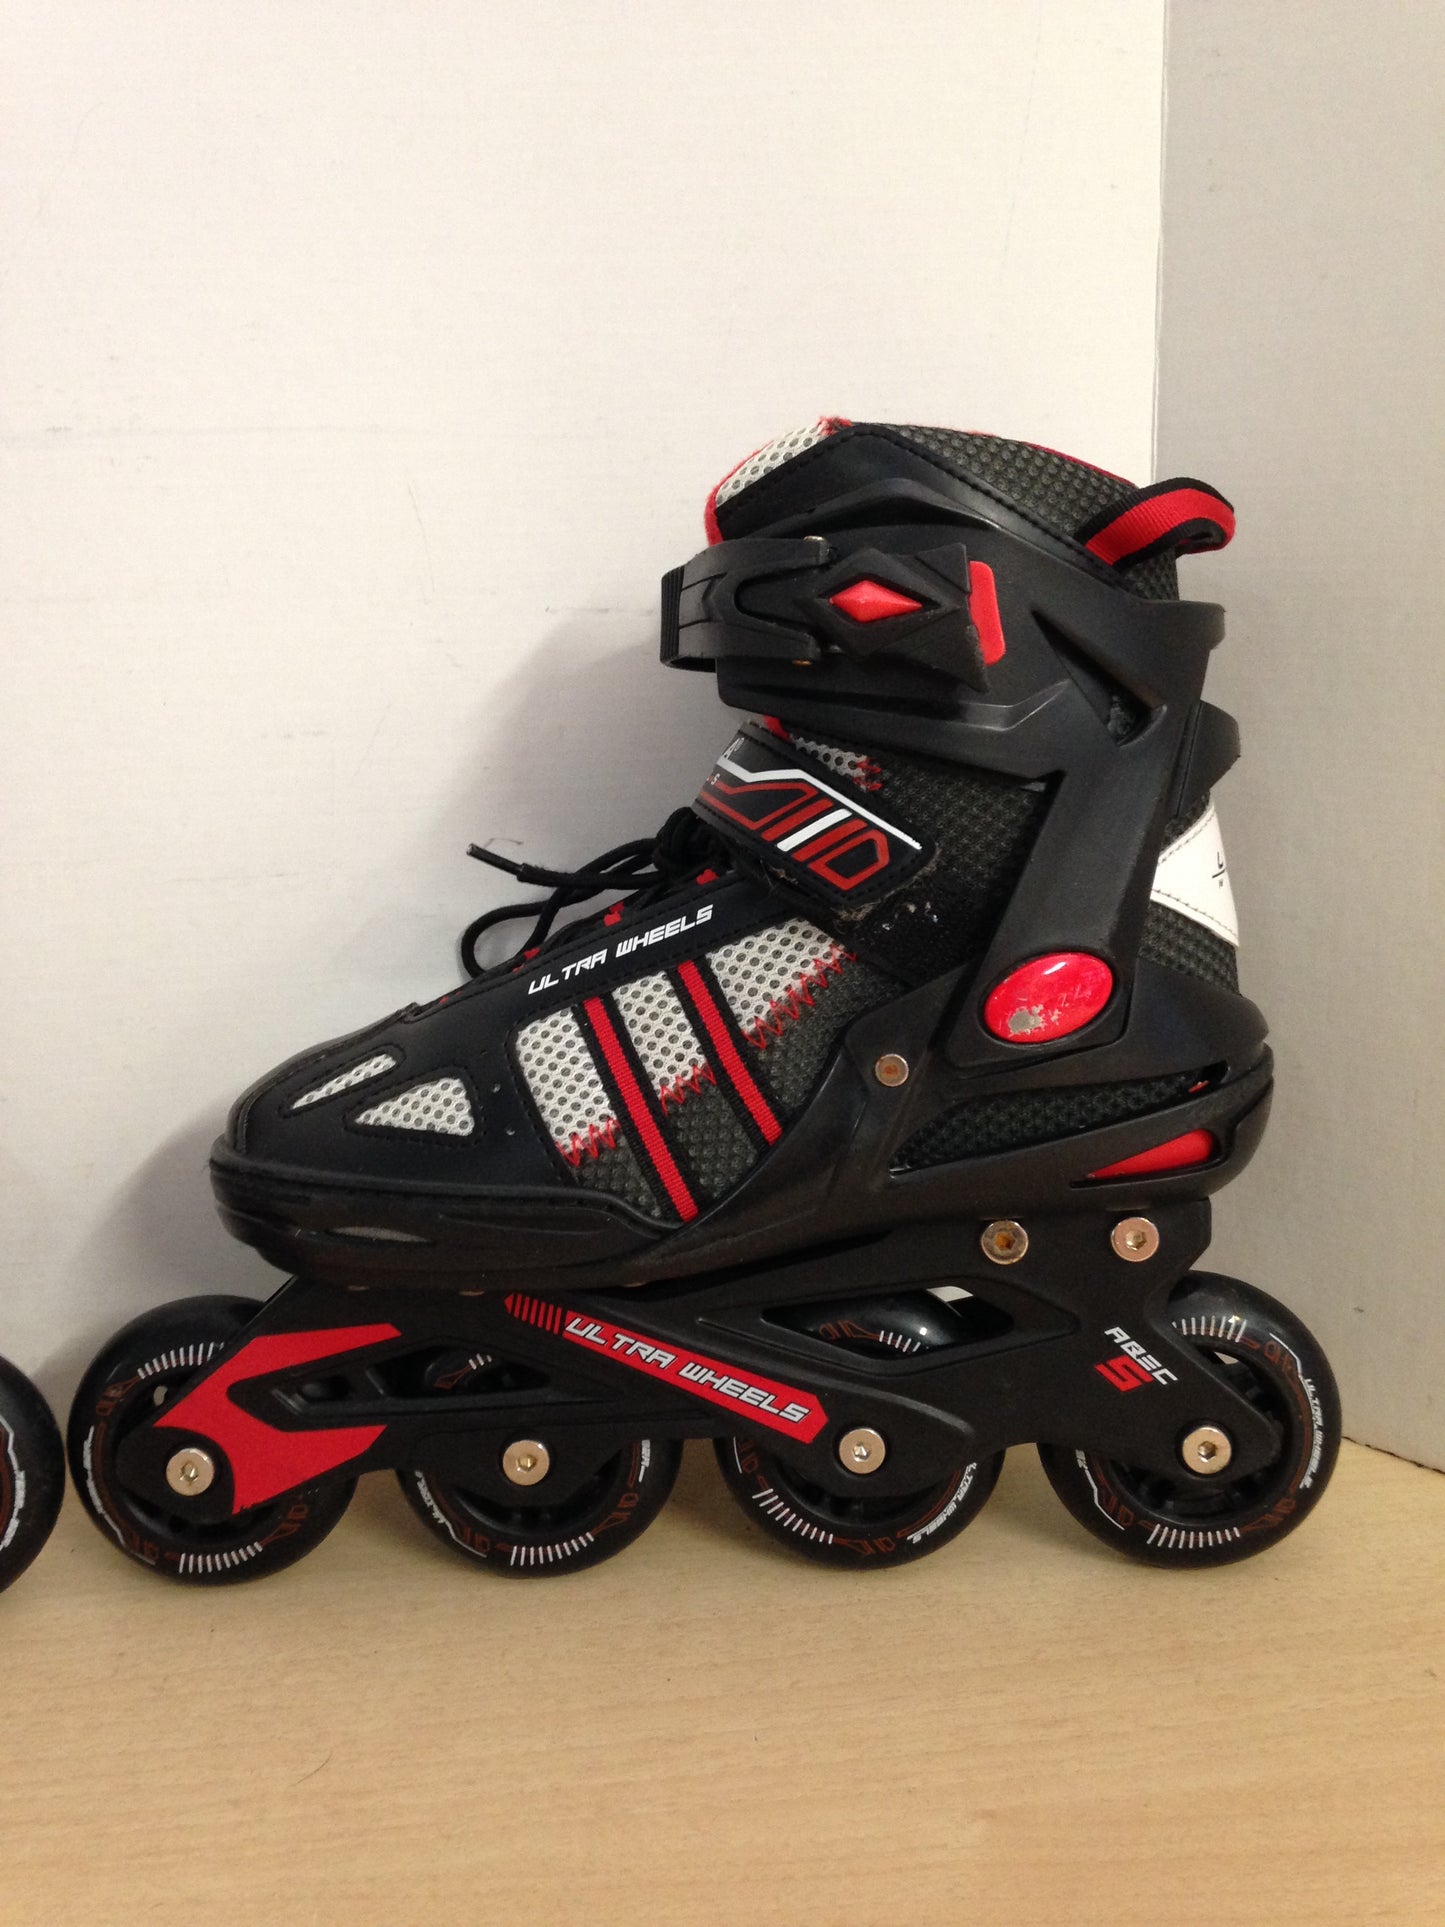 Inline Roller Skates Child Size 5 Ultra Wheels Rubber Tires Red Black Excellent